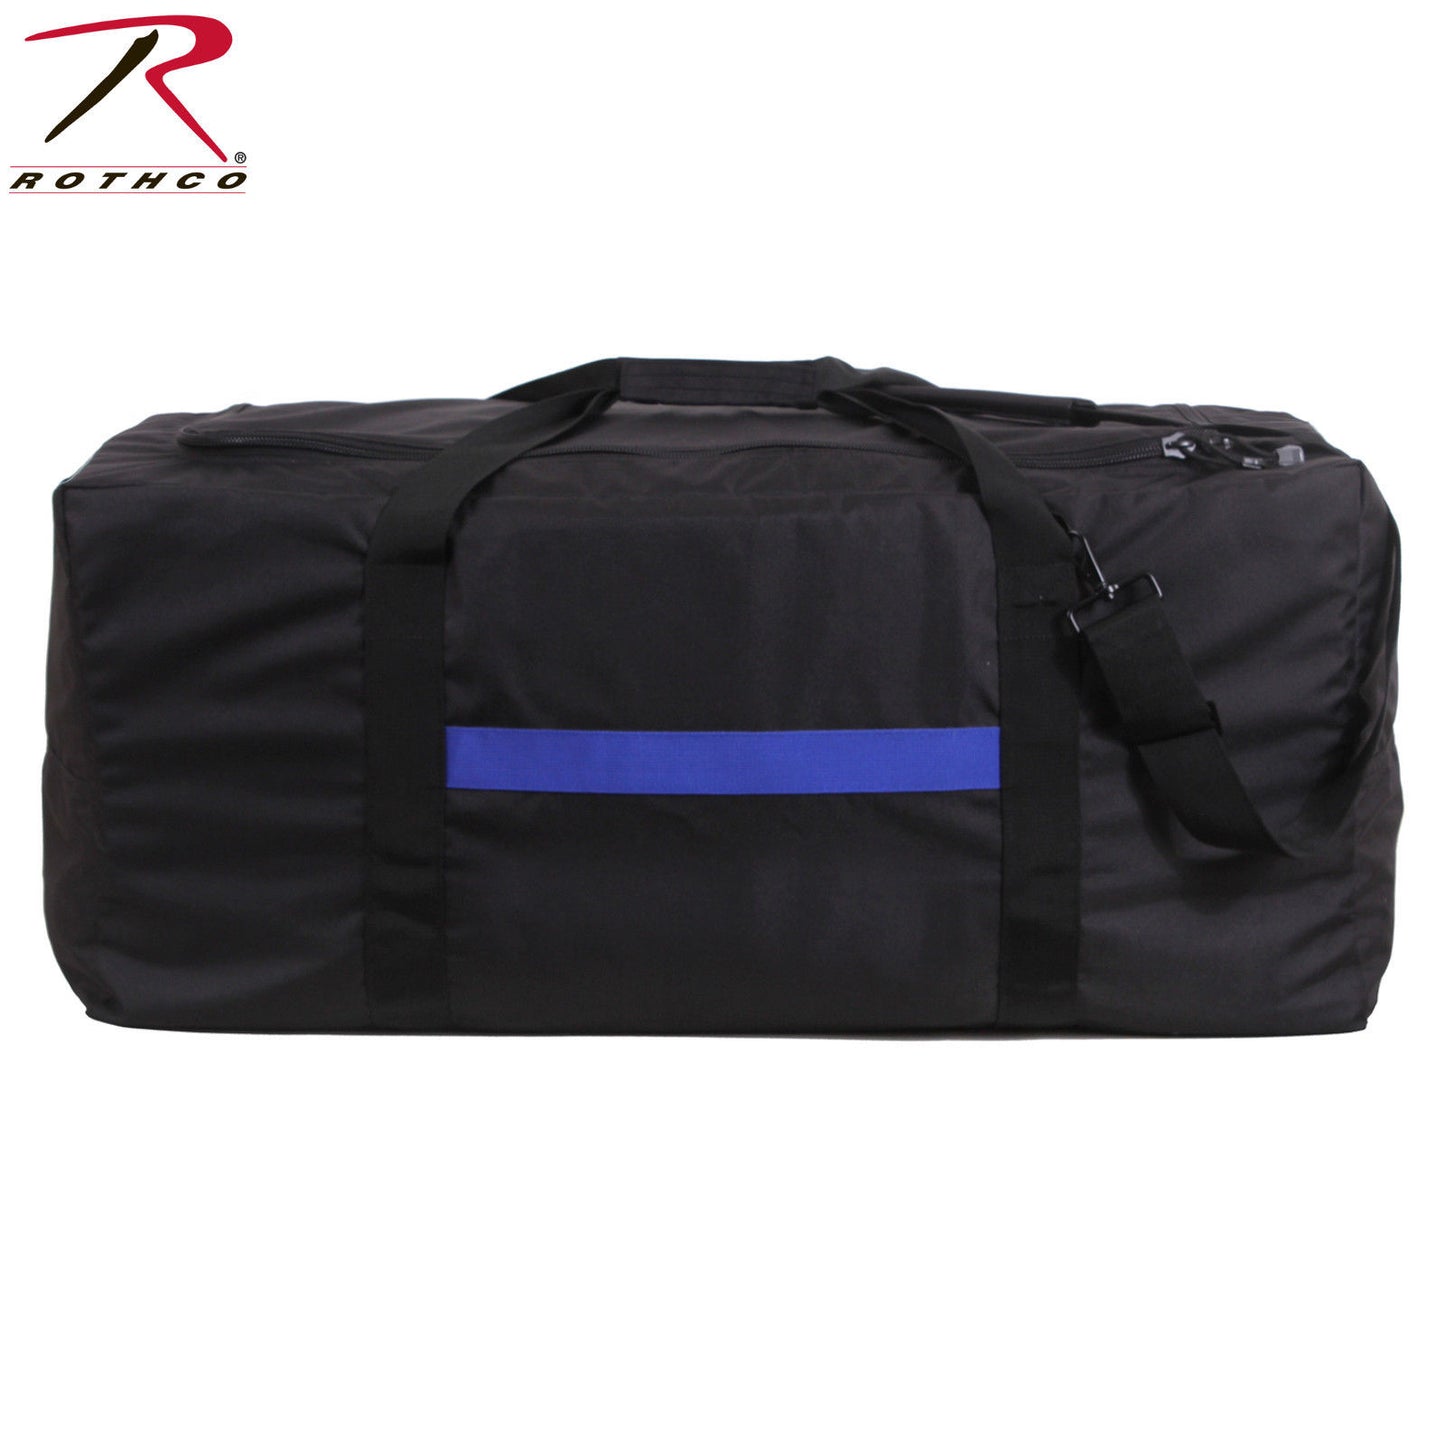 Rothco Thin Blue Line Modular Gear Bag - Oversized Gear Utility & Equipment Bag